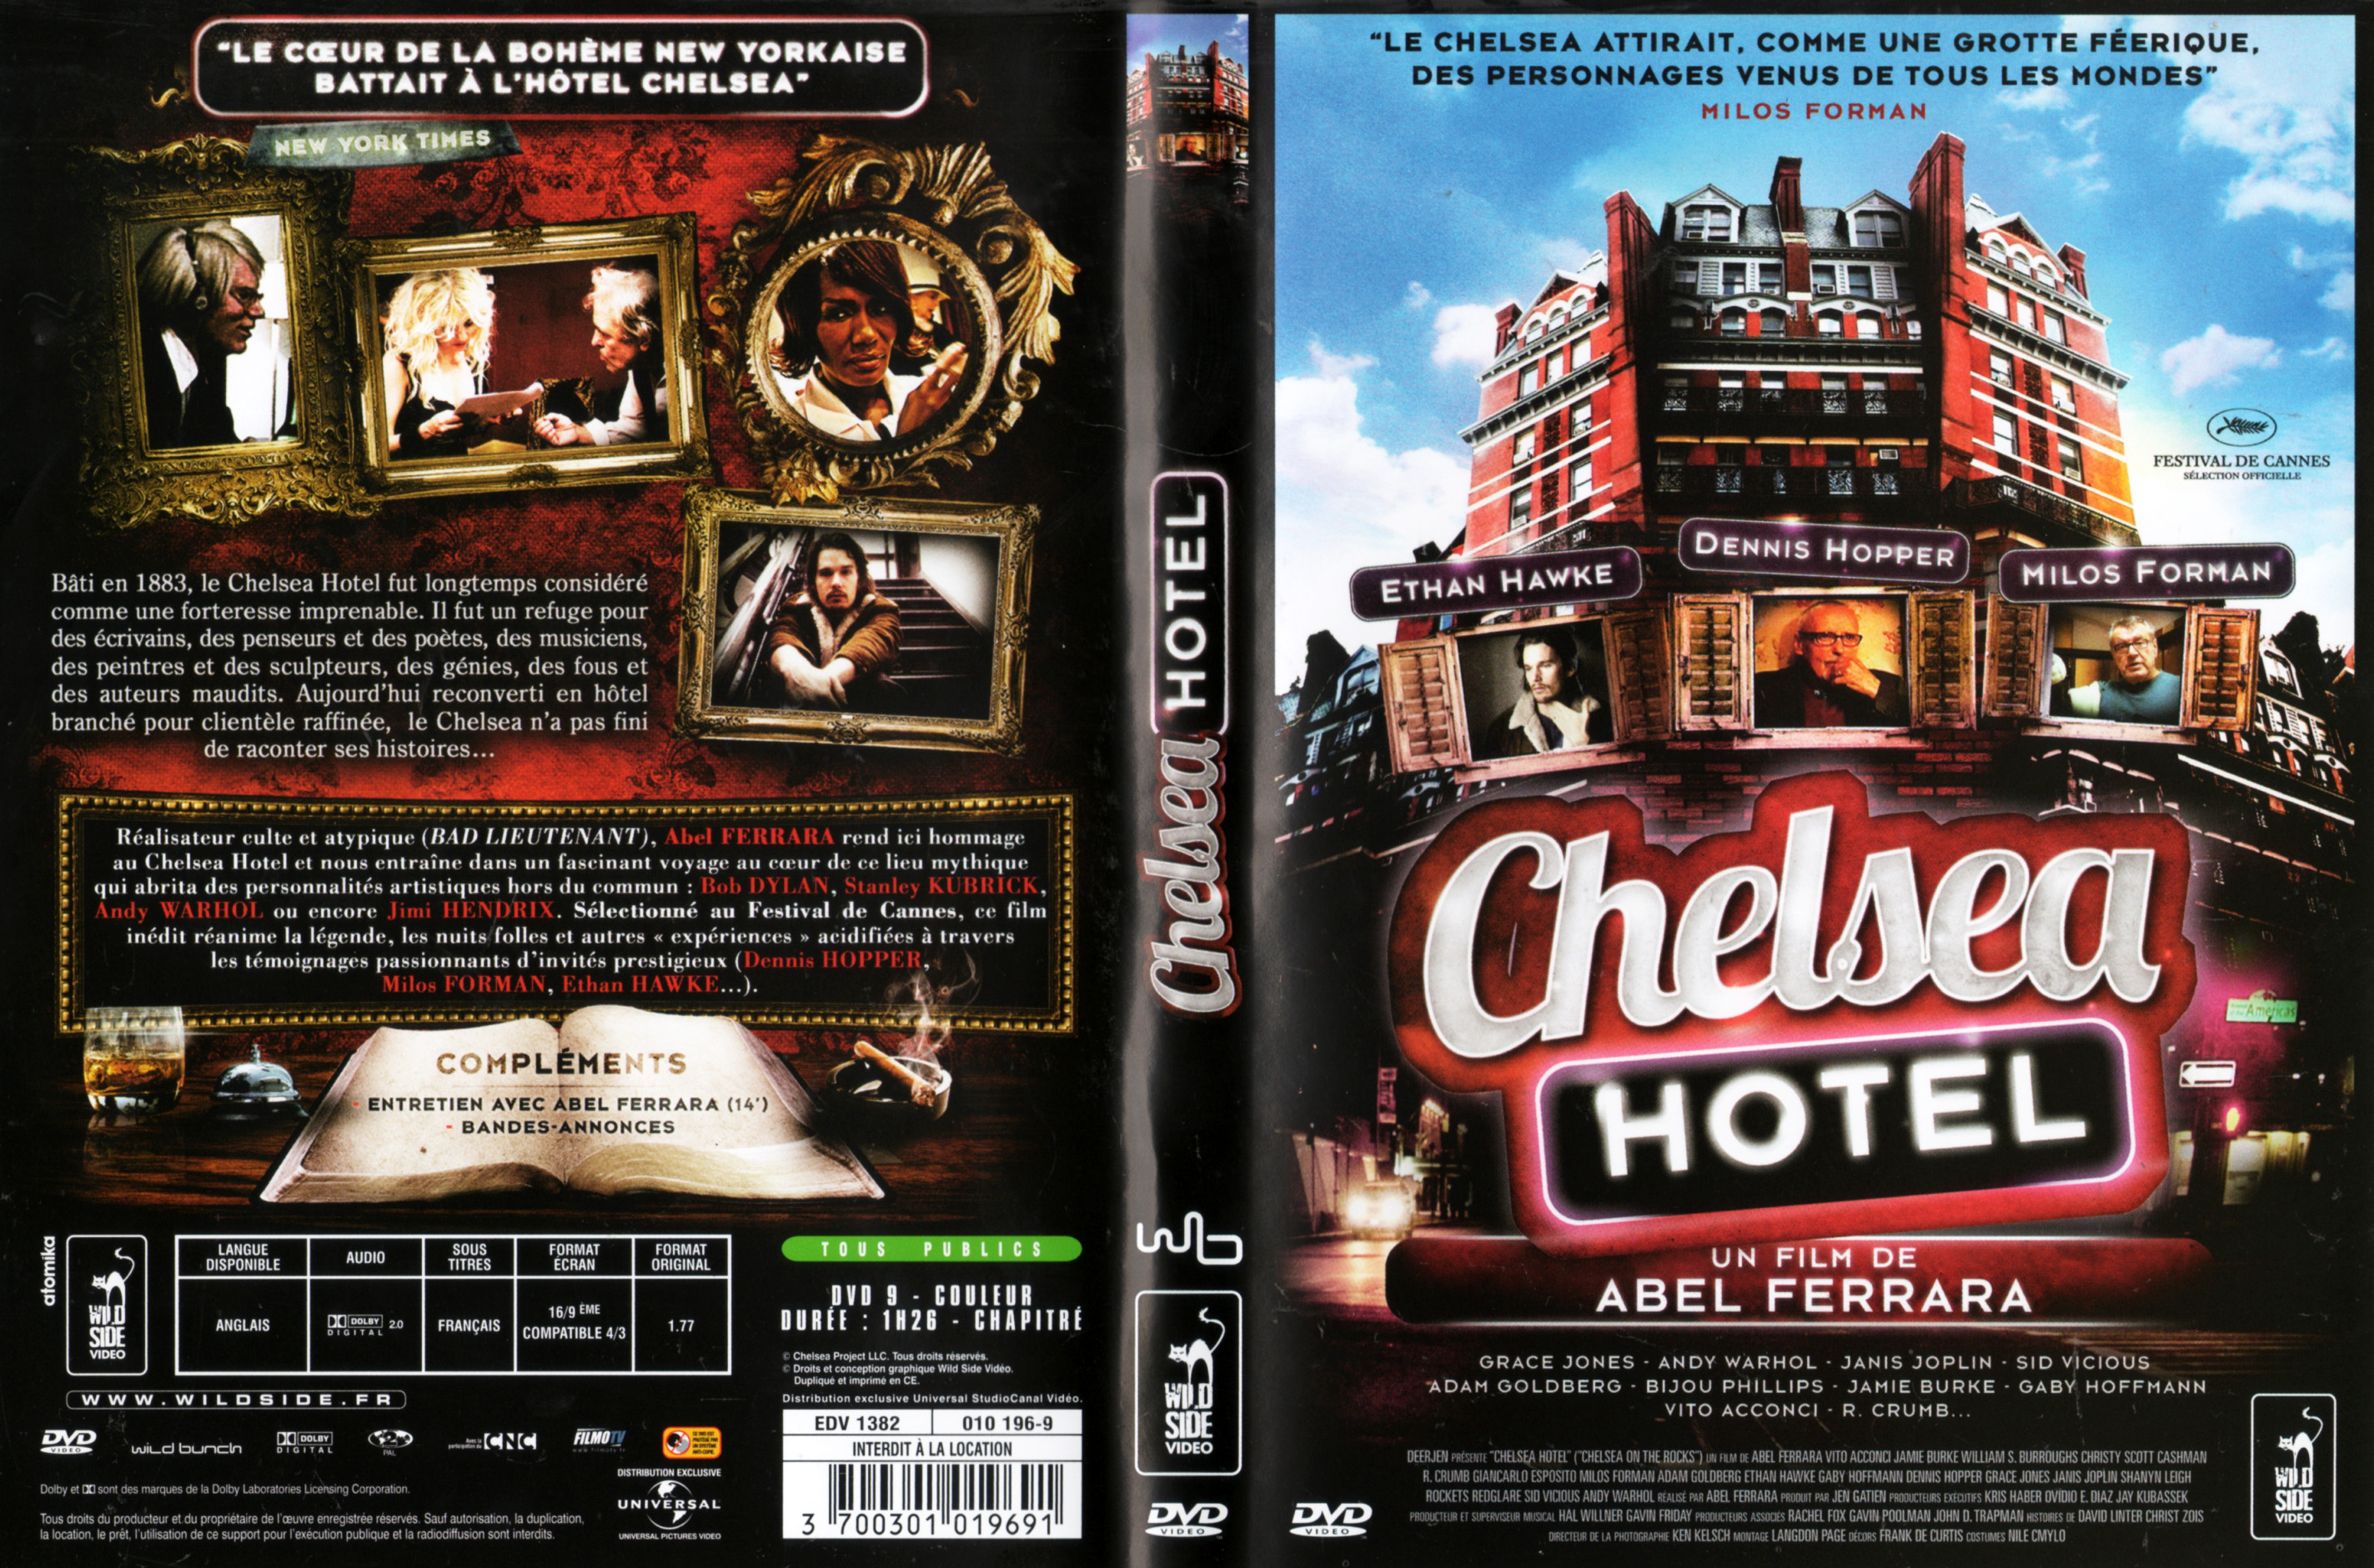 Jaquette DVD Chelsea Hotel